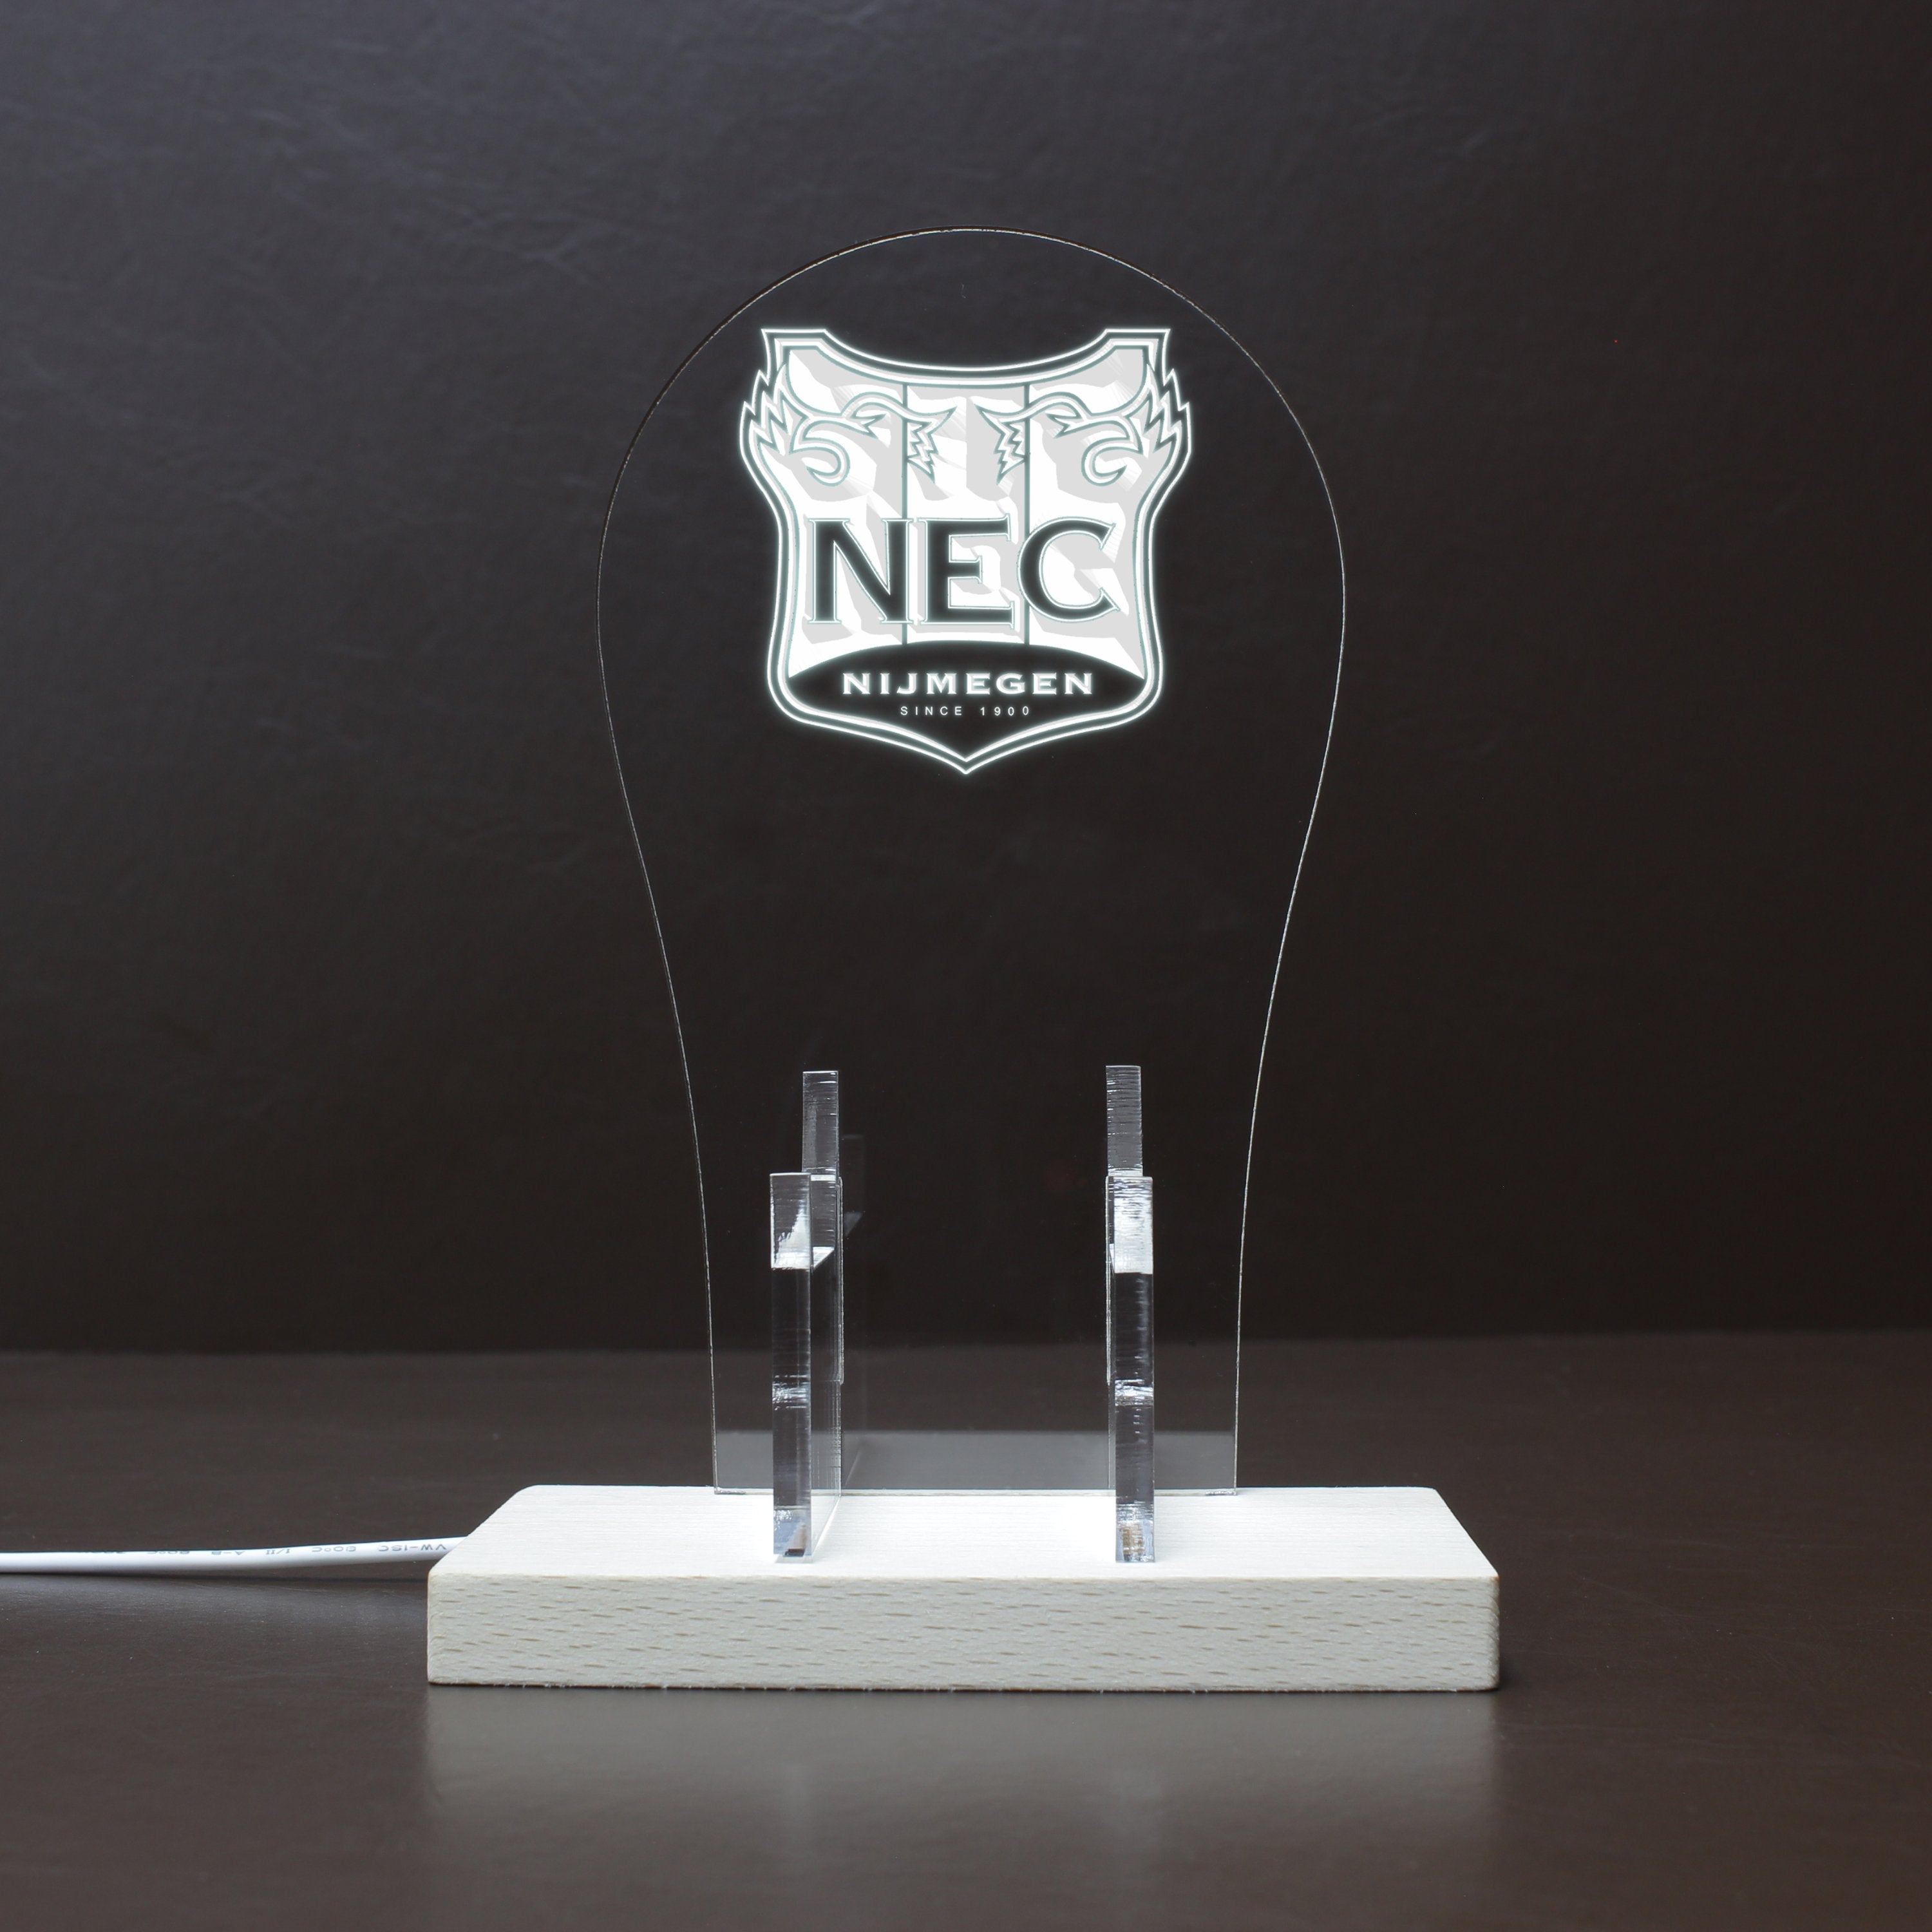 NEC Nijmegen Dutch Eredivisie RGB LED Gaming Headset Controller Stand